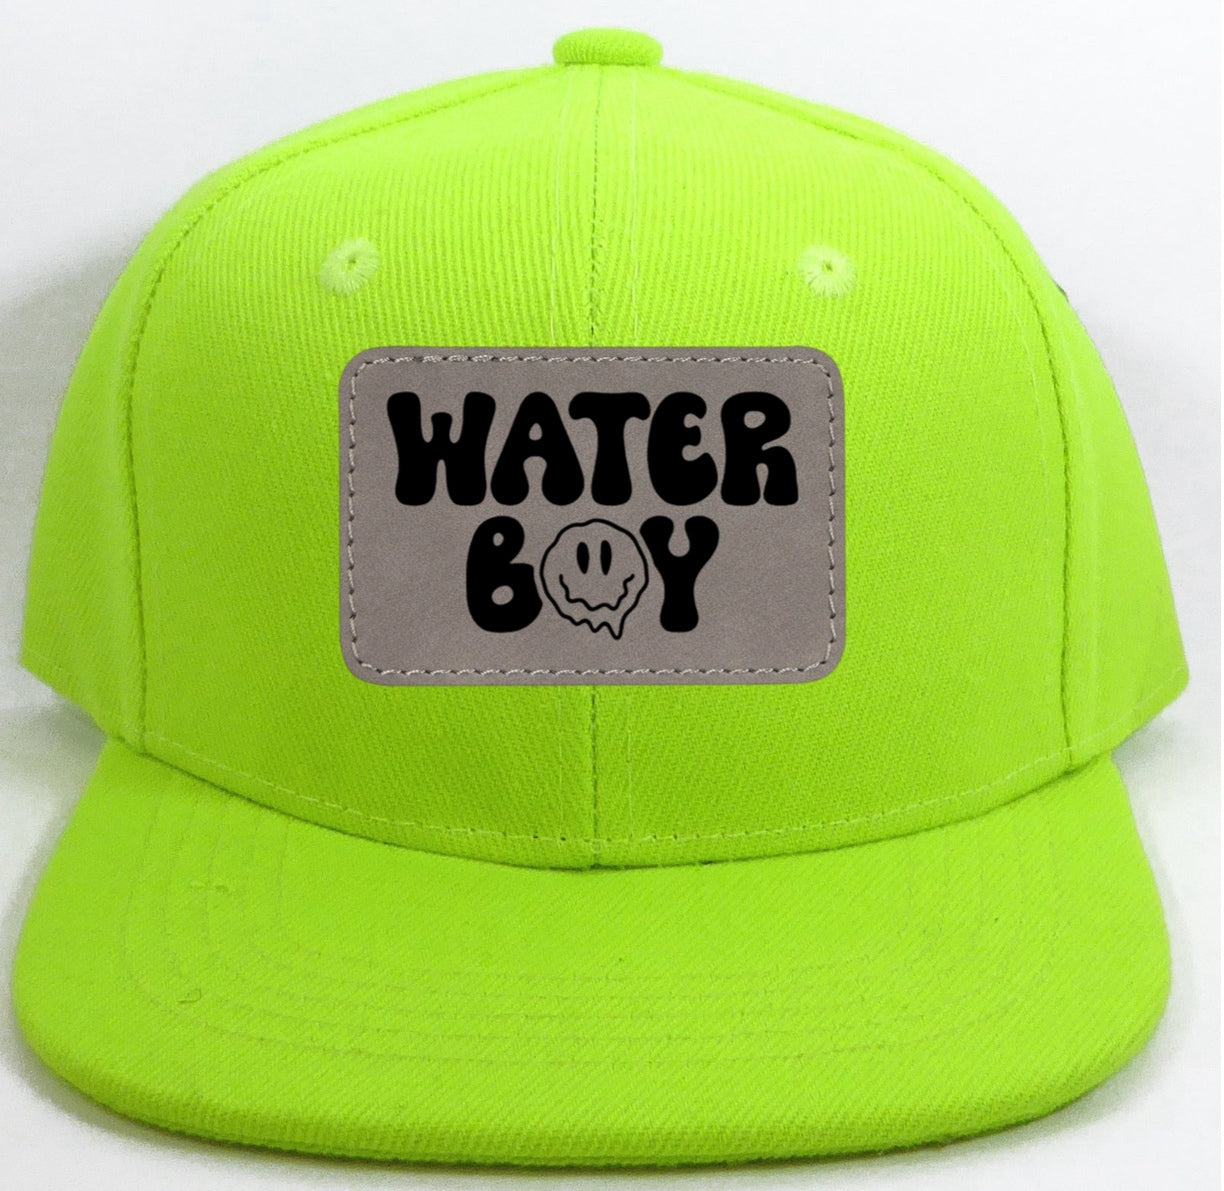 Water Boy Hat